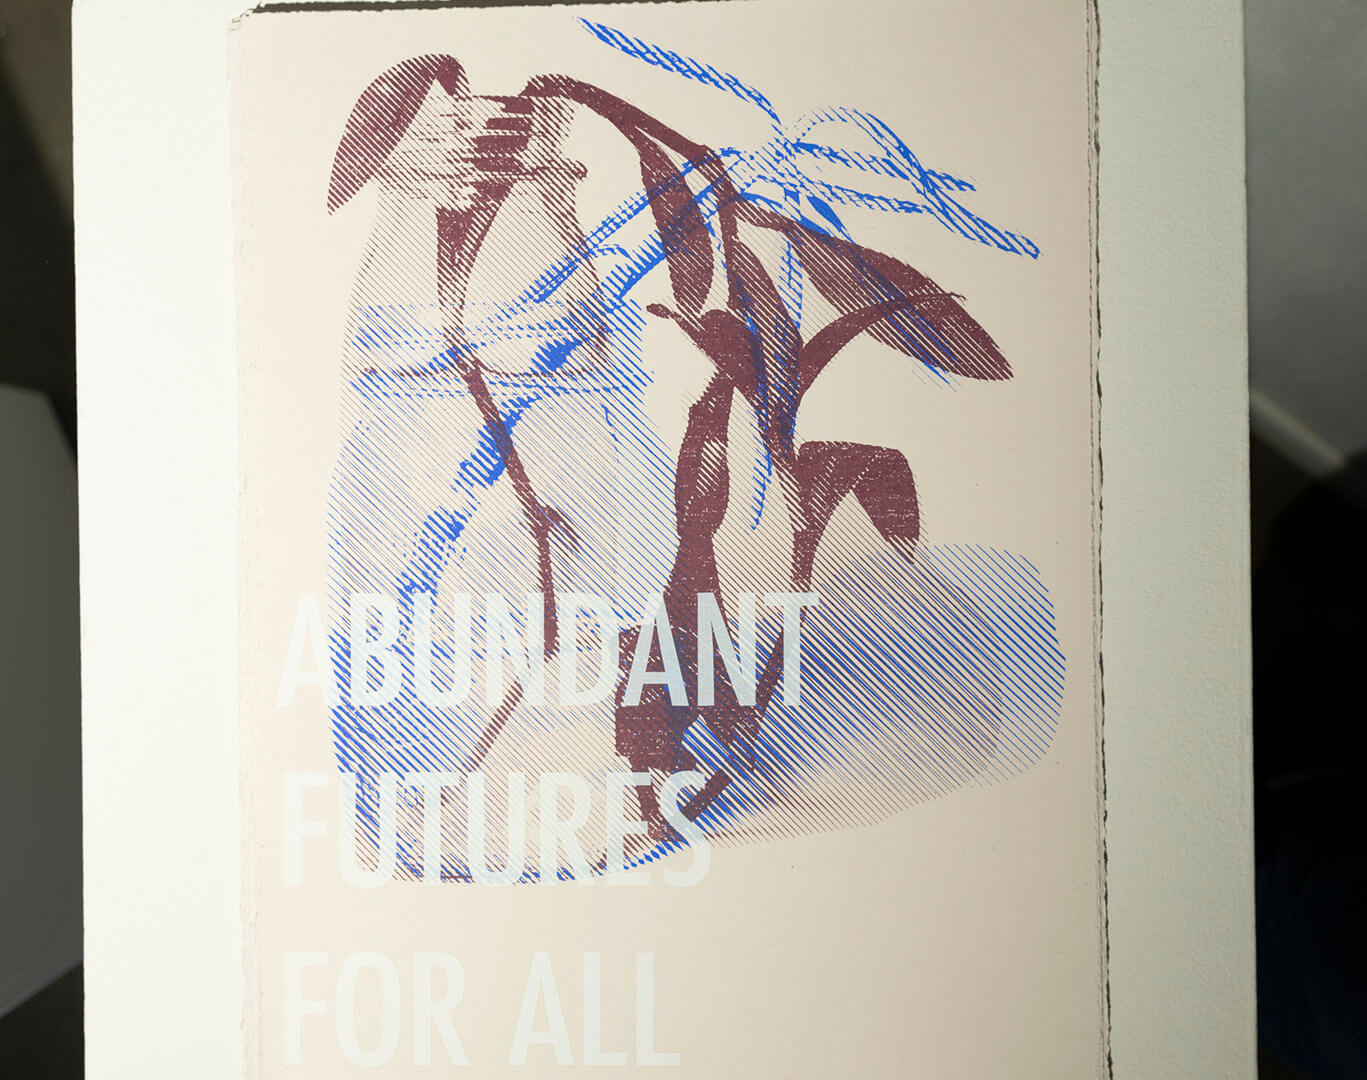 Abundant futures - posters. Free for gallery visitors. Screen prints. Each 15 x 11". 2021.. Image credit: Sarah Fuller.